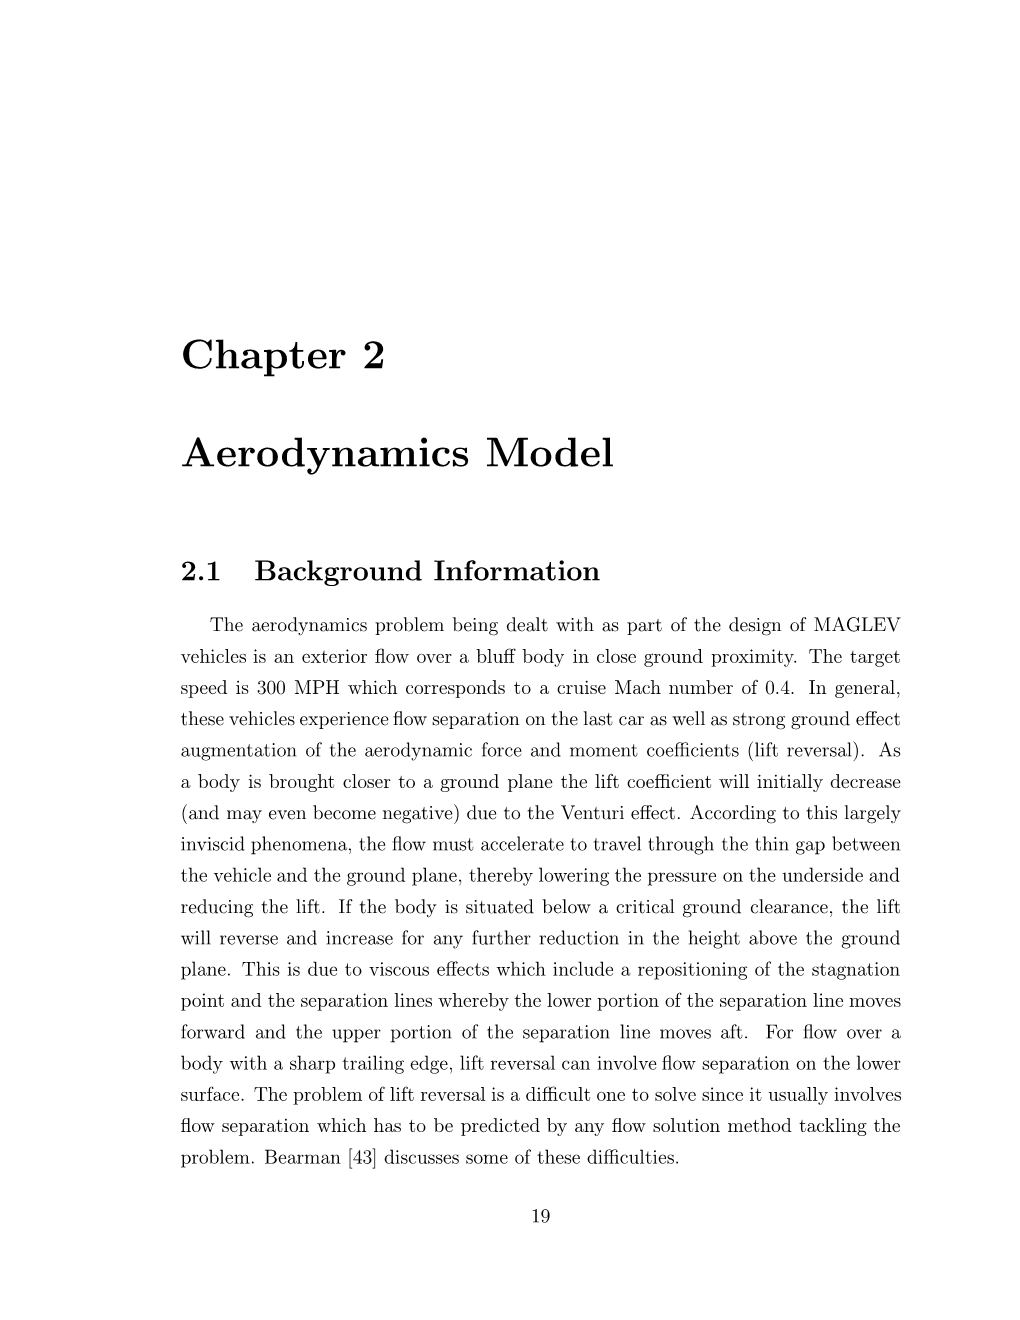 Chapter 2 Aerodynamics Model